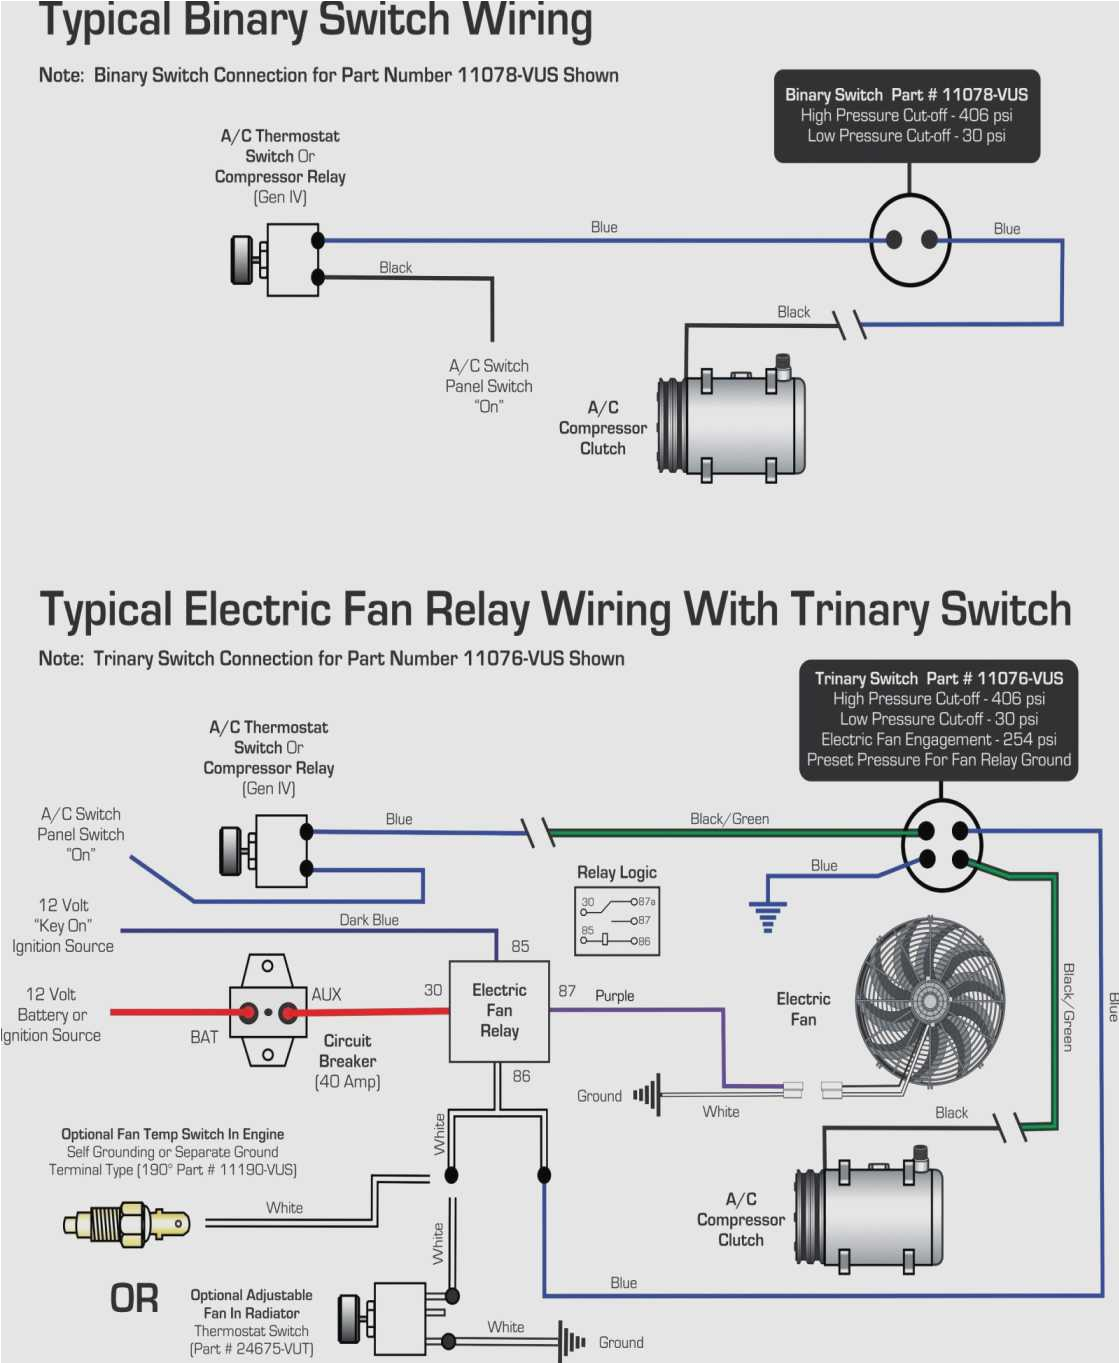 belimo lmb24 3 t wiring diagram belimo actuator wiring of belimo lmb24 3 t wiring diagram 1 jpg